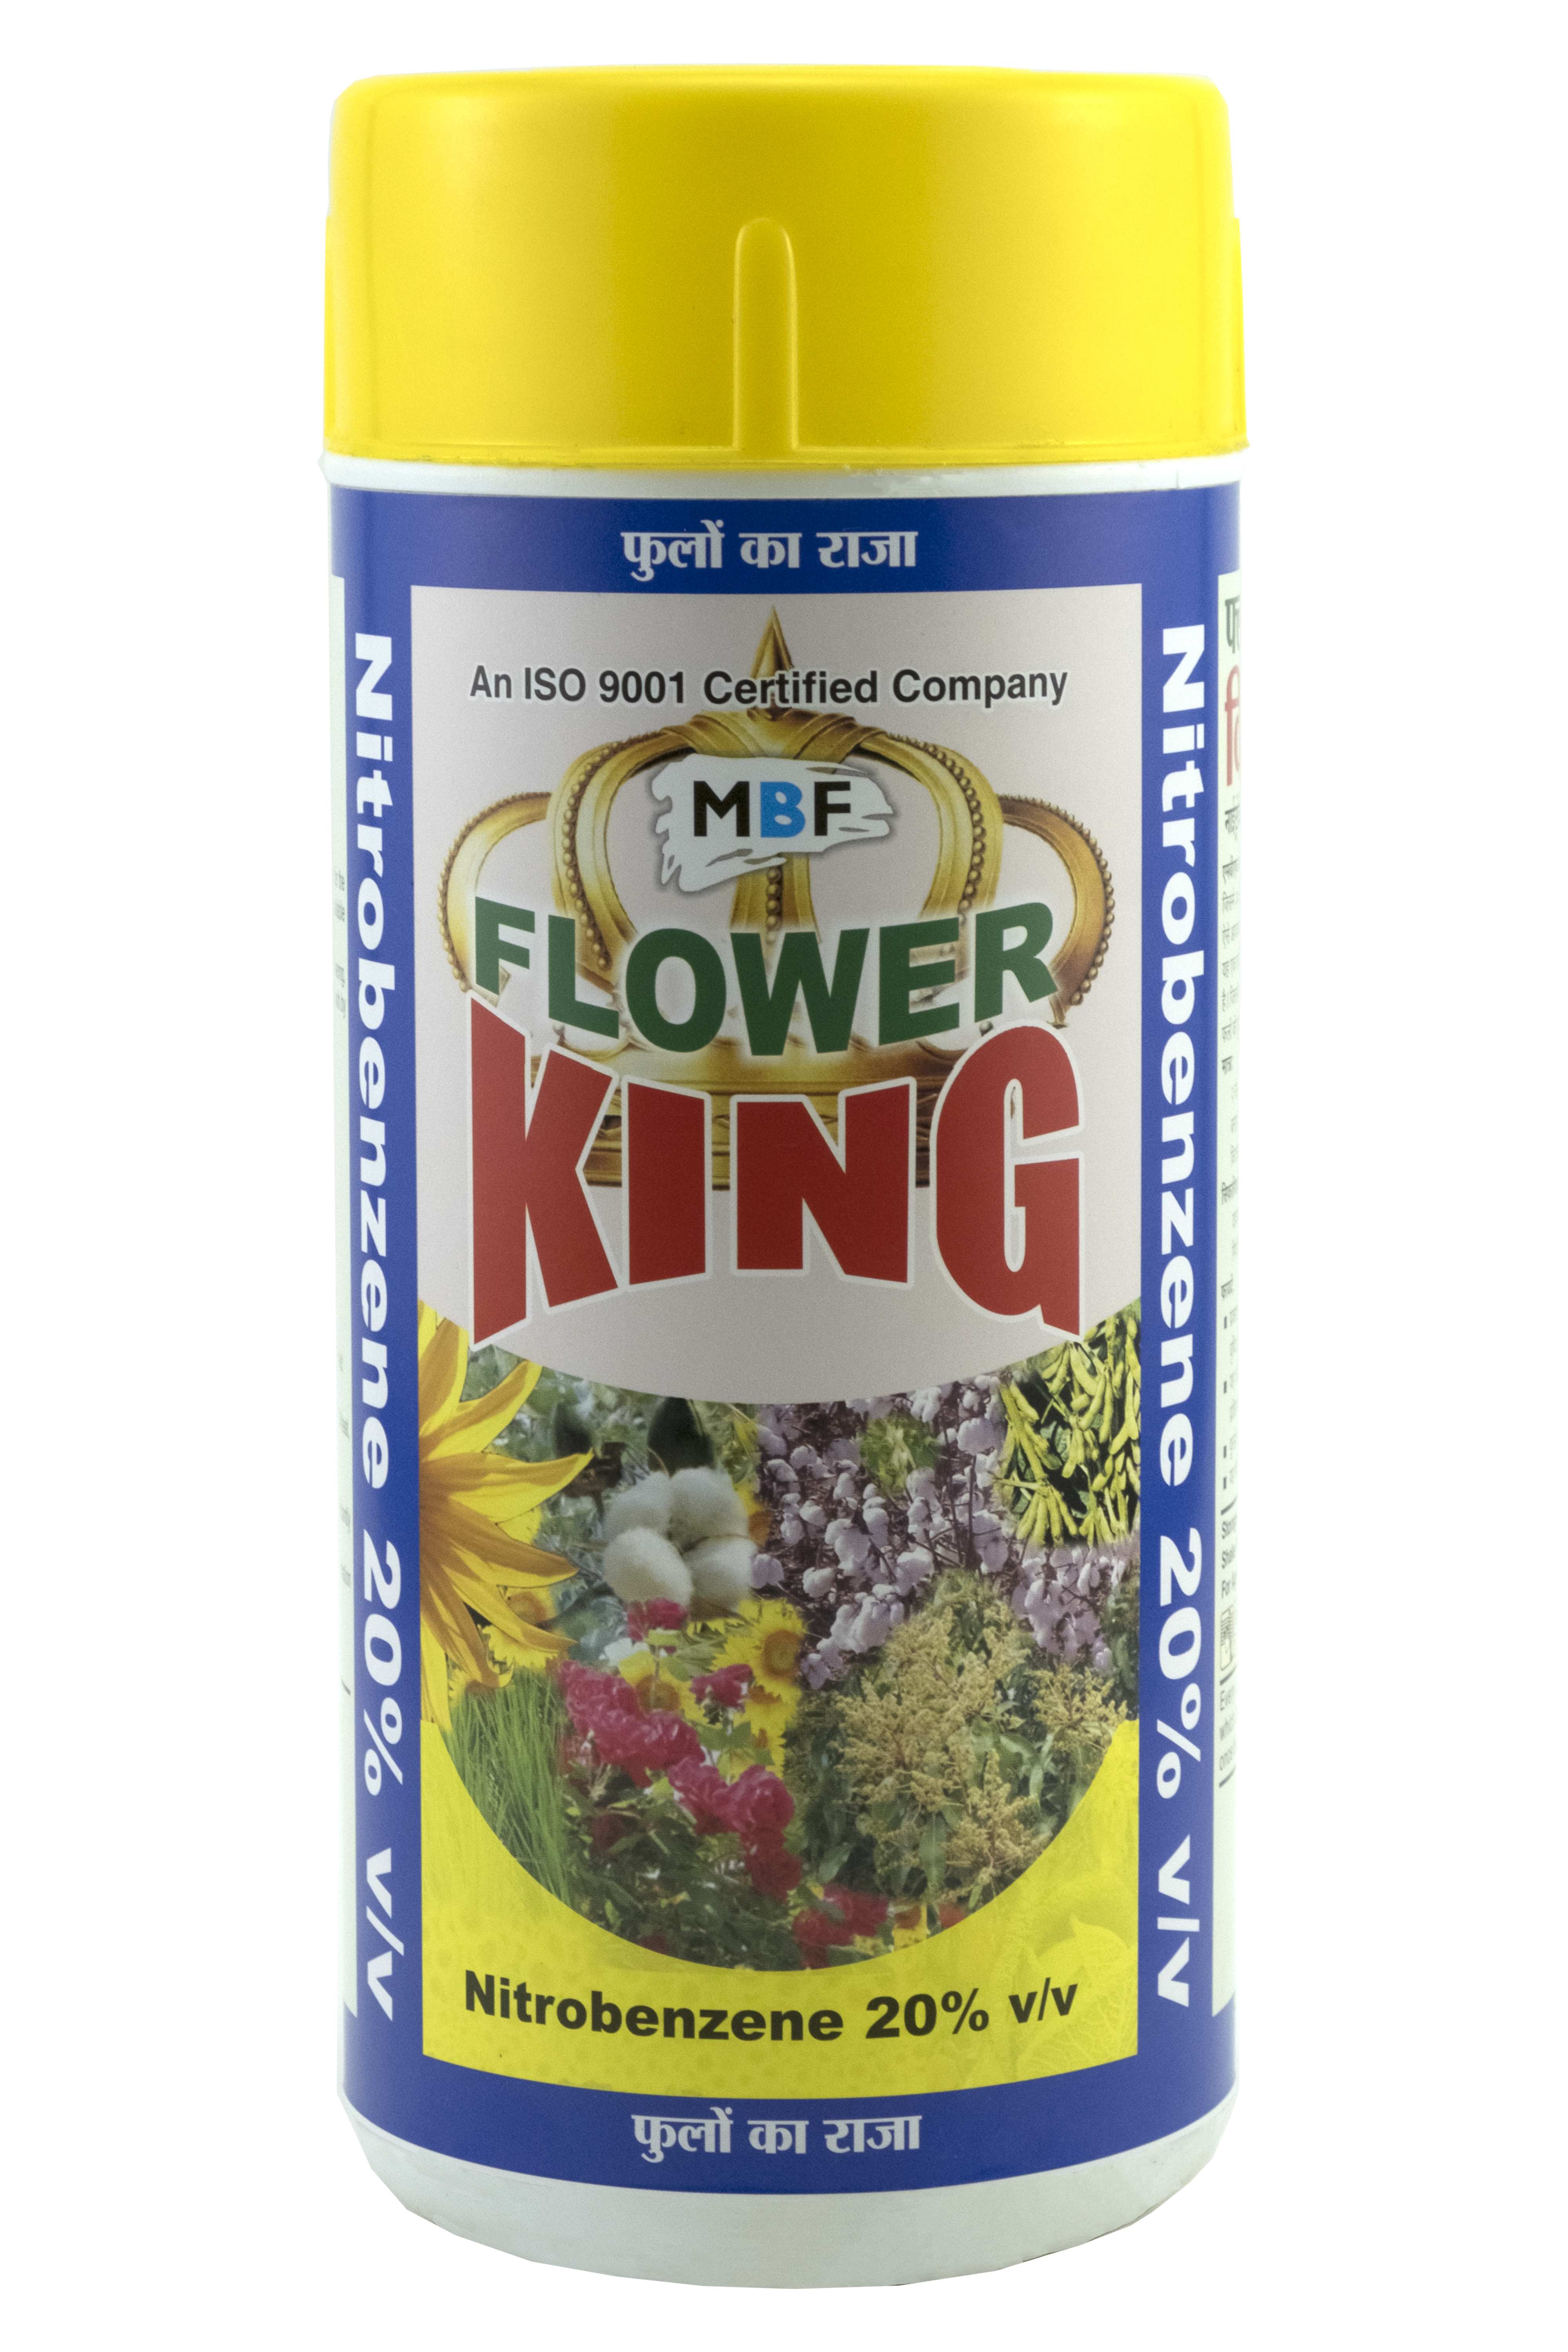 MBF Flower King